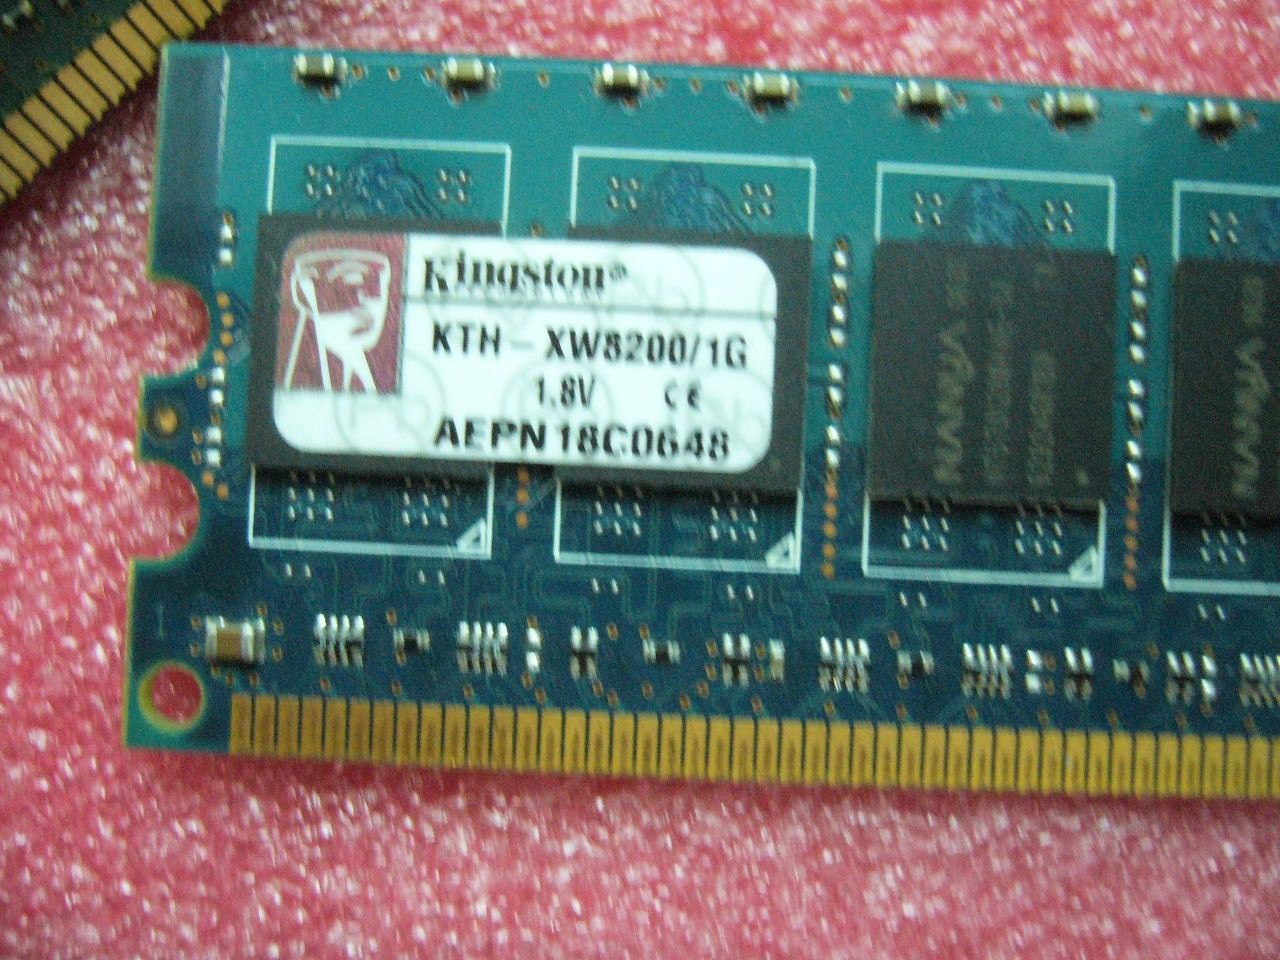 QTY 1x 1GB PC2-3200 DDR2 400MHz ECC Registered Memory Kingston KTH-XW8200/1G - Click Image to Close